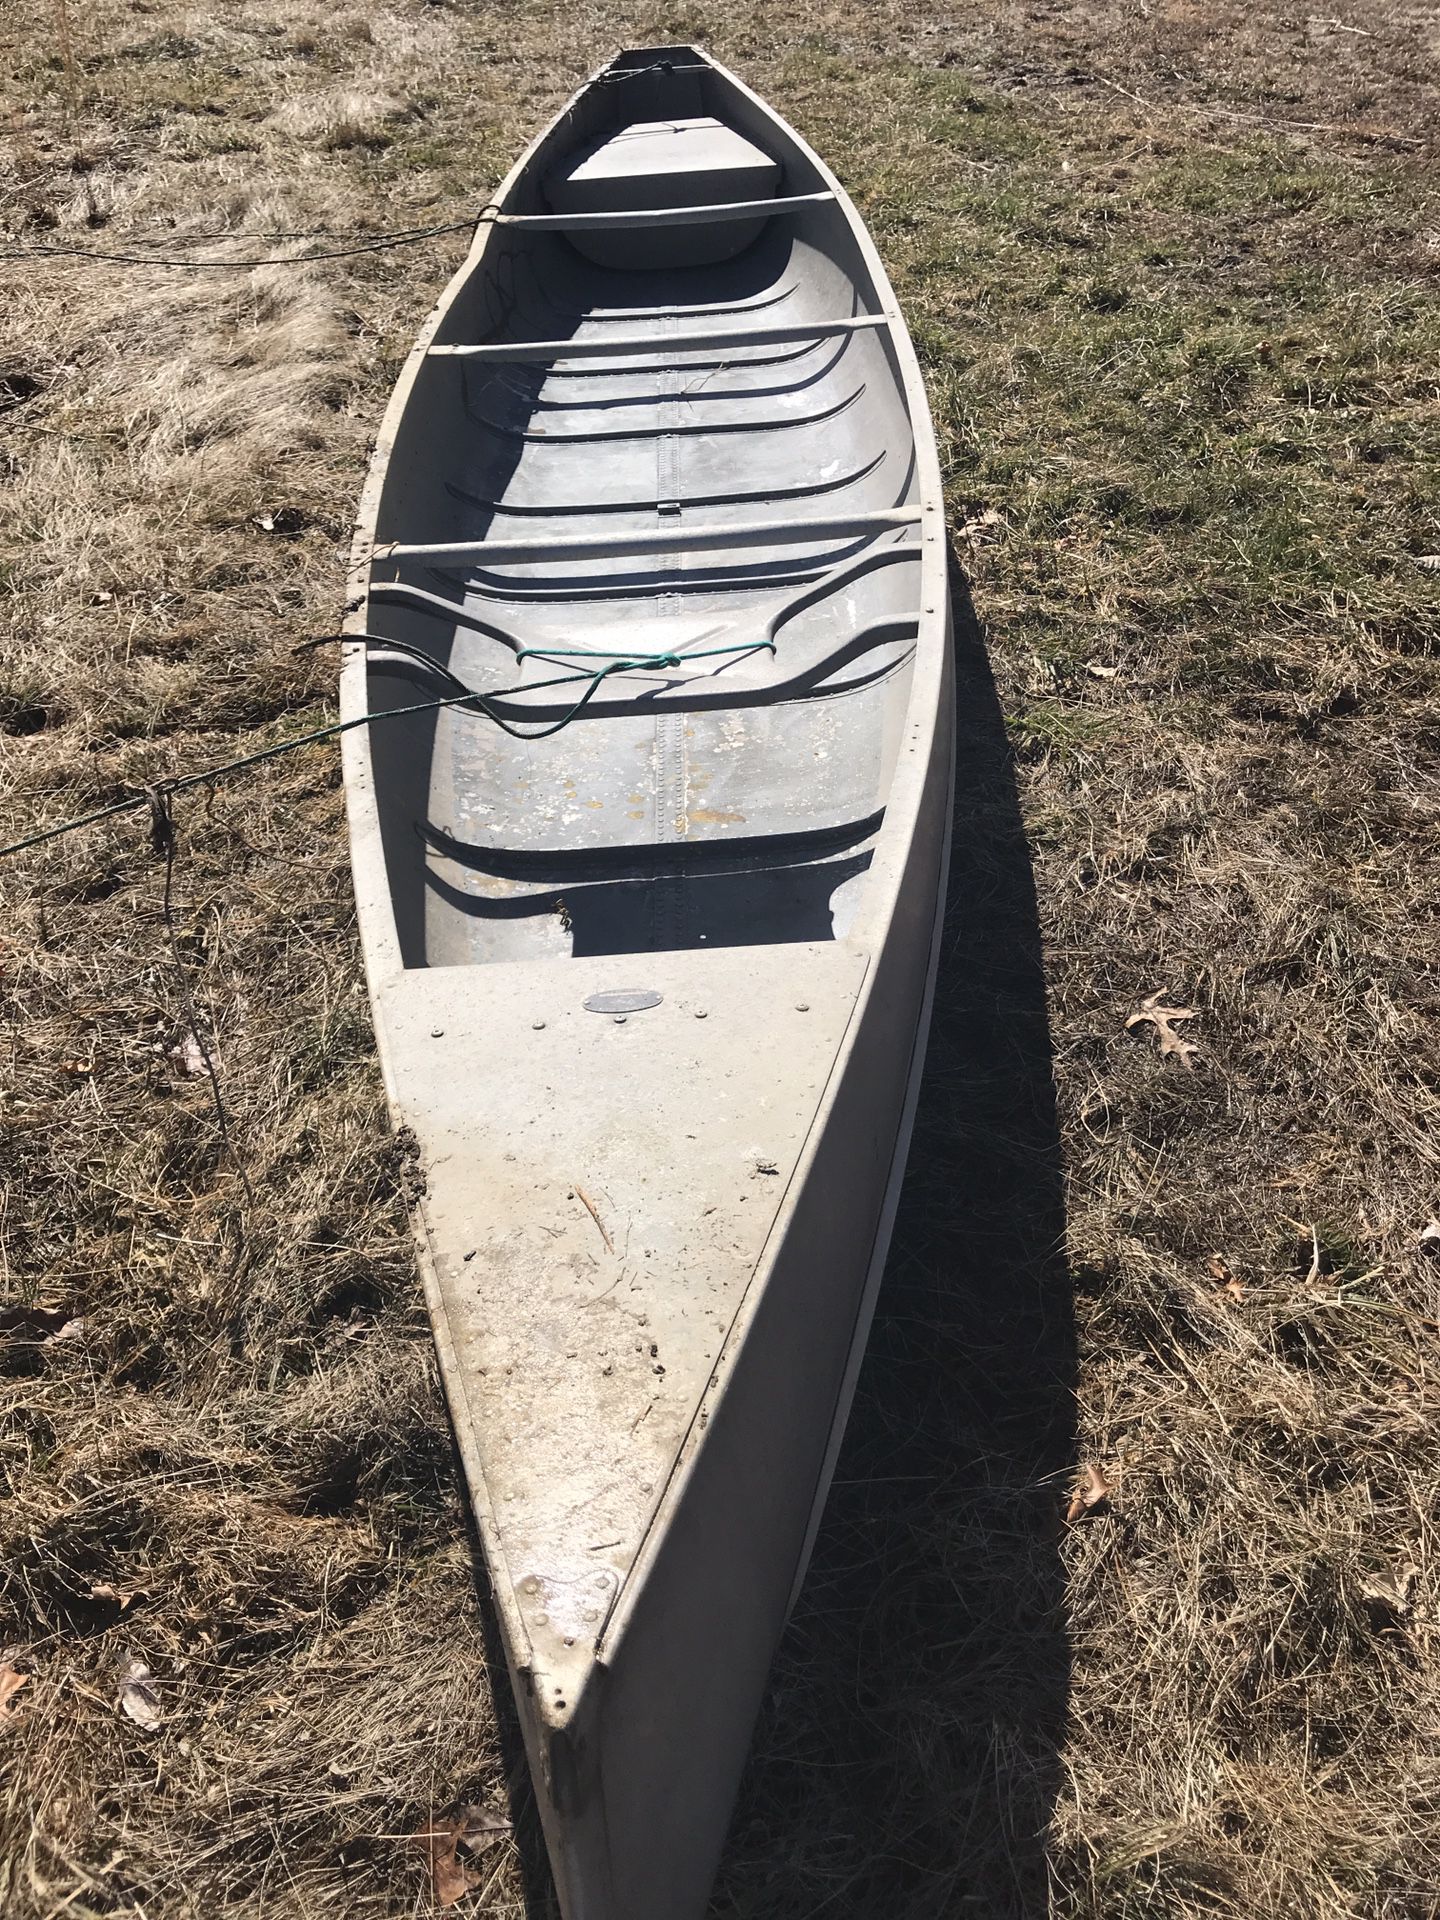 grumman canoes for sale virginia